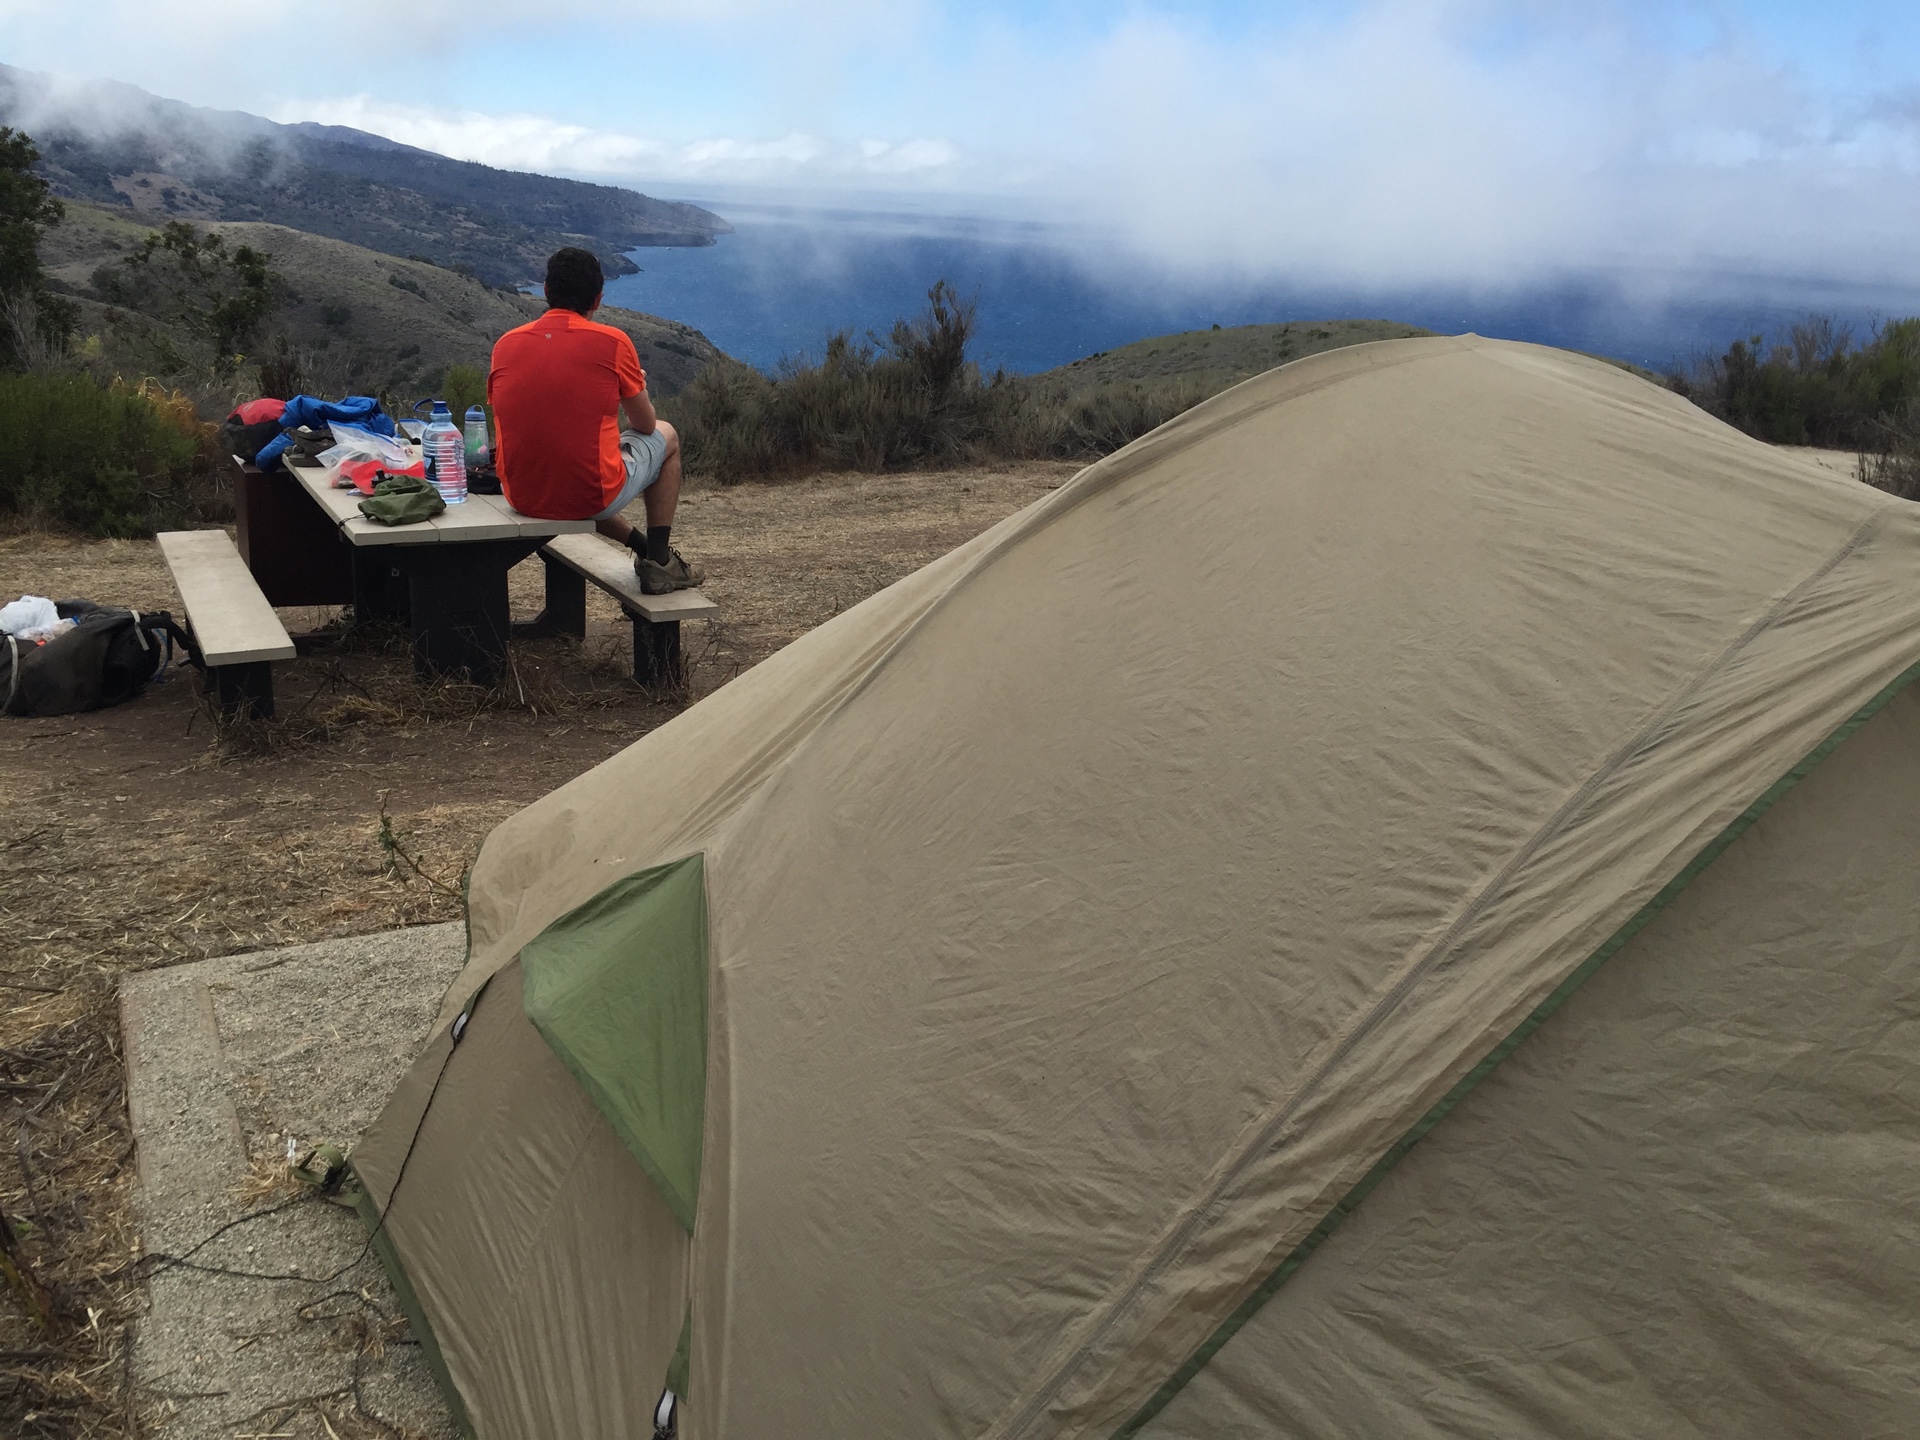 A camper enjoys the view from Del Norte Campground above Prisoner's Harbor on Santa Cruz Island, California.